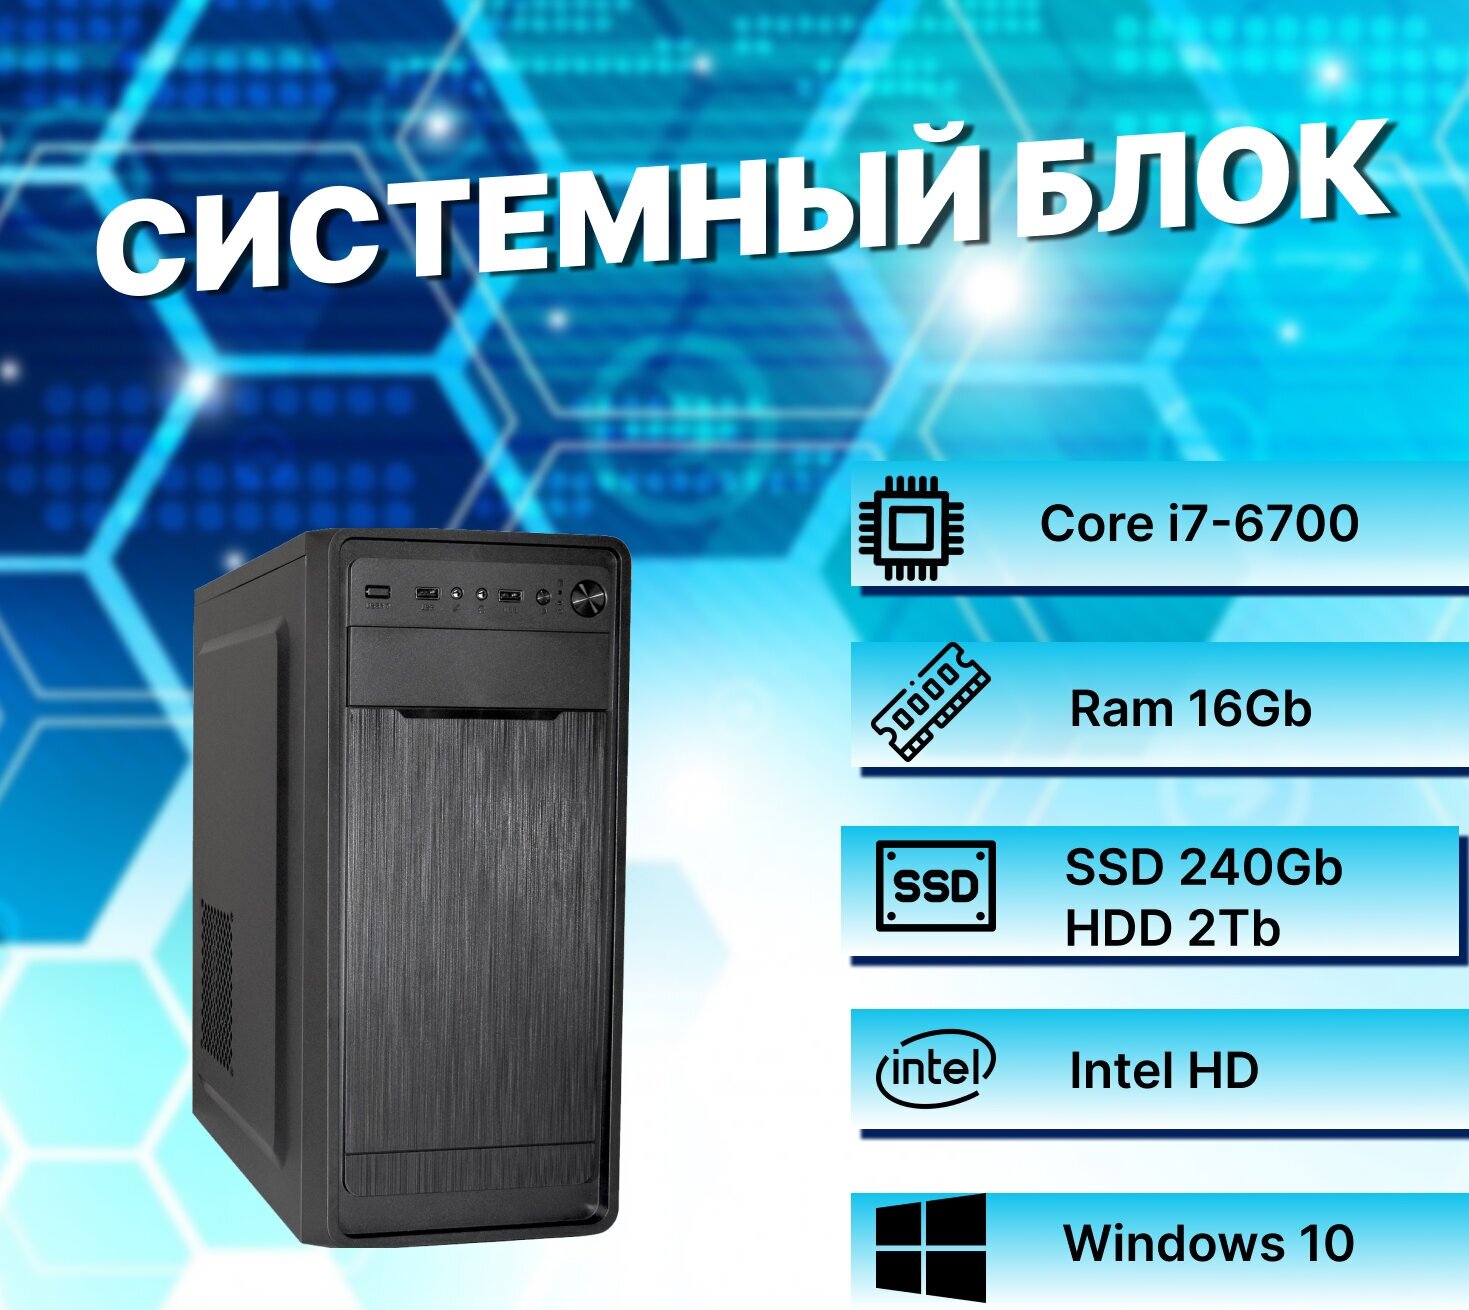 Системный блок Intel Core I7-6700 (3.4ГГц)/ RAM 16Gb/ SSD 240Gb/ HDD 2Tb/ Intel HD/ Windows 10 Pro